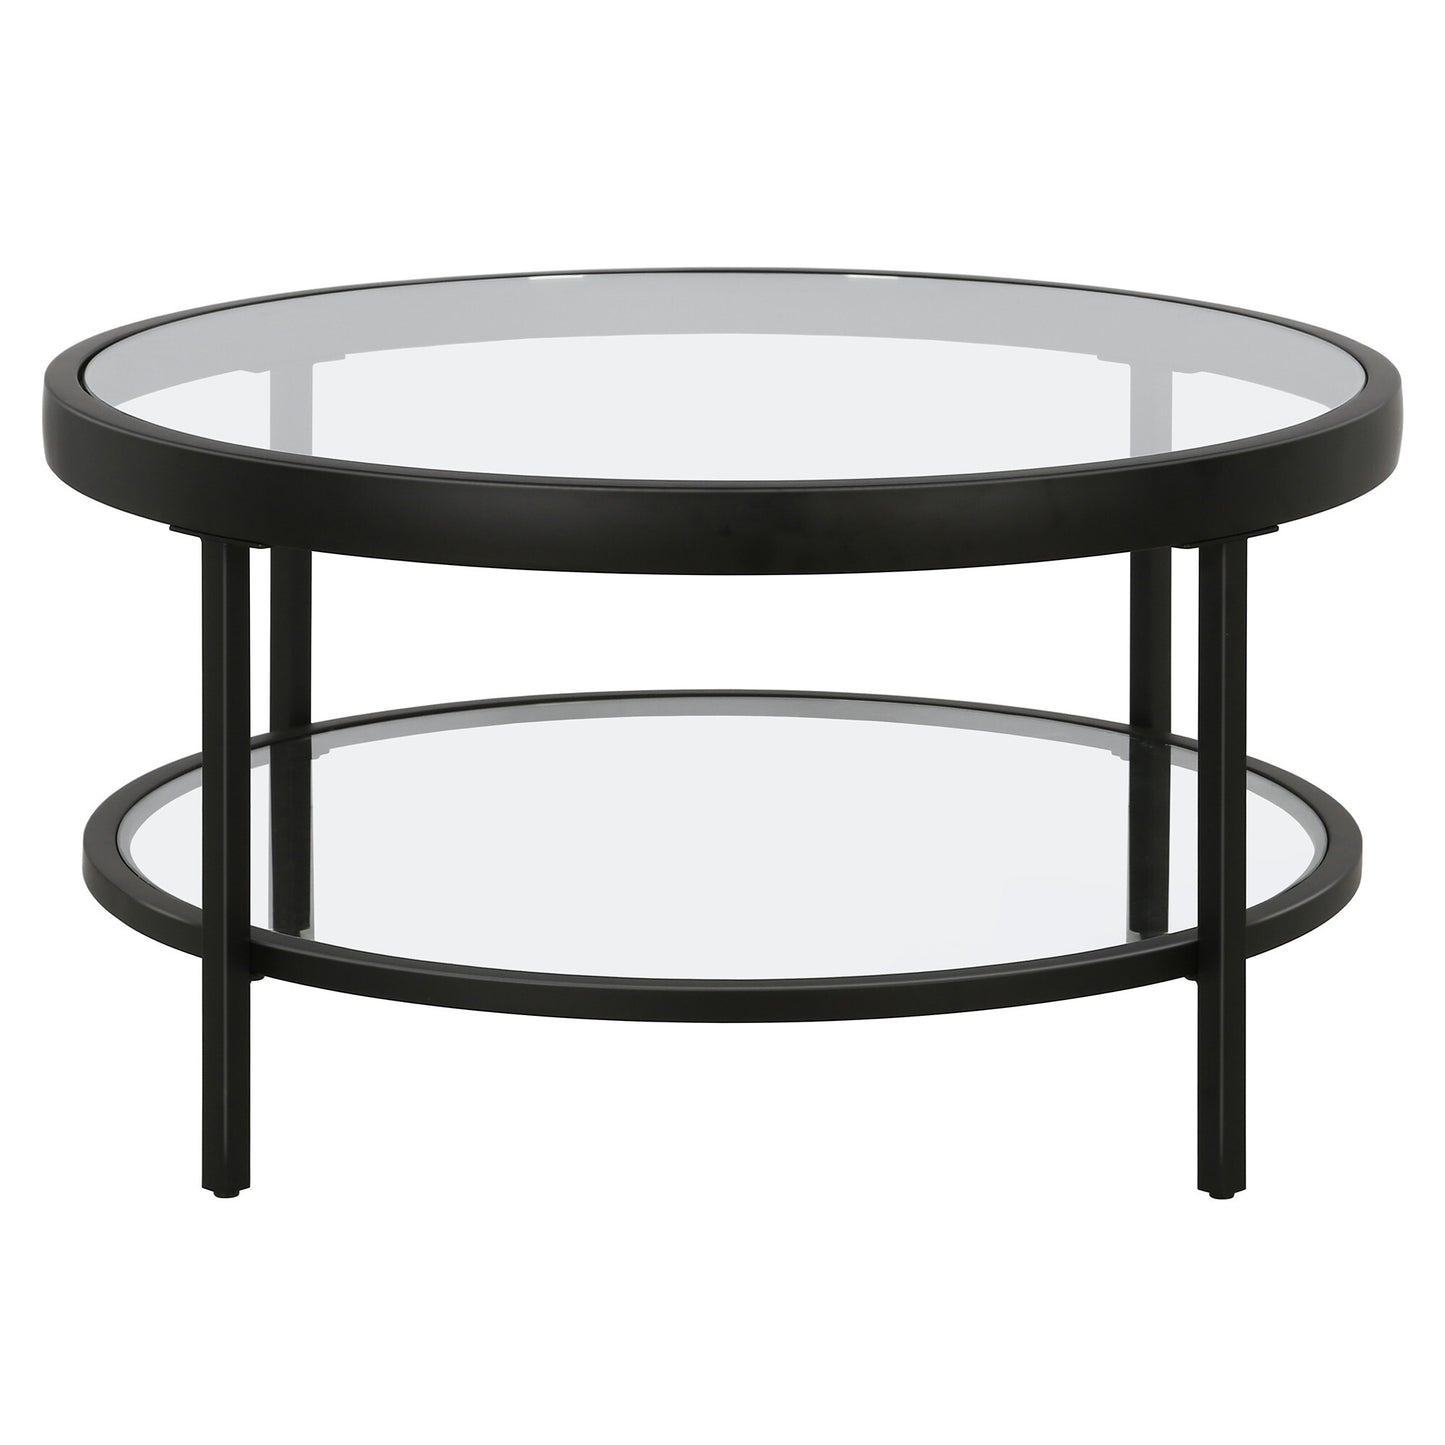 32" Black Glass Round Coffee Table With Shelf